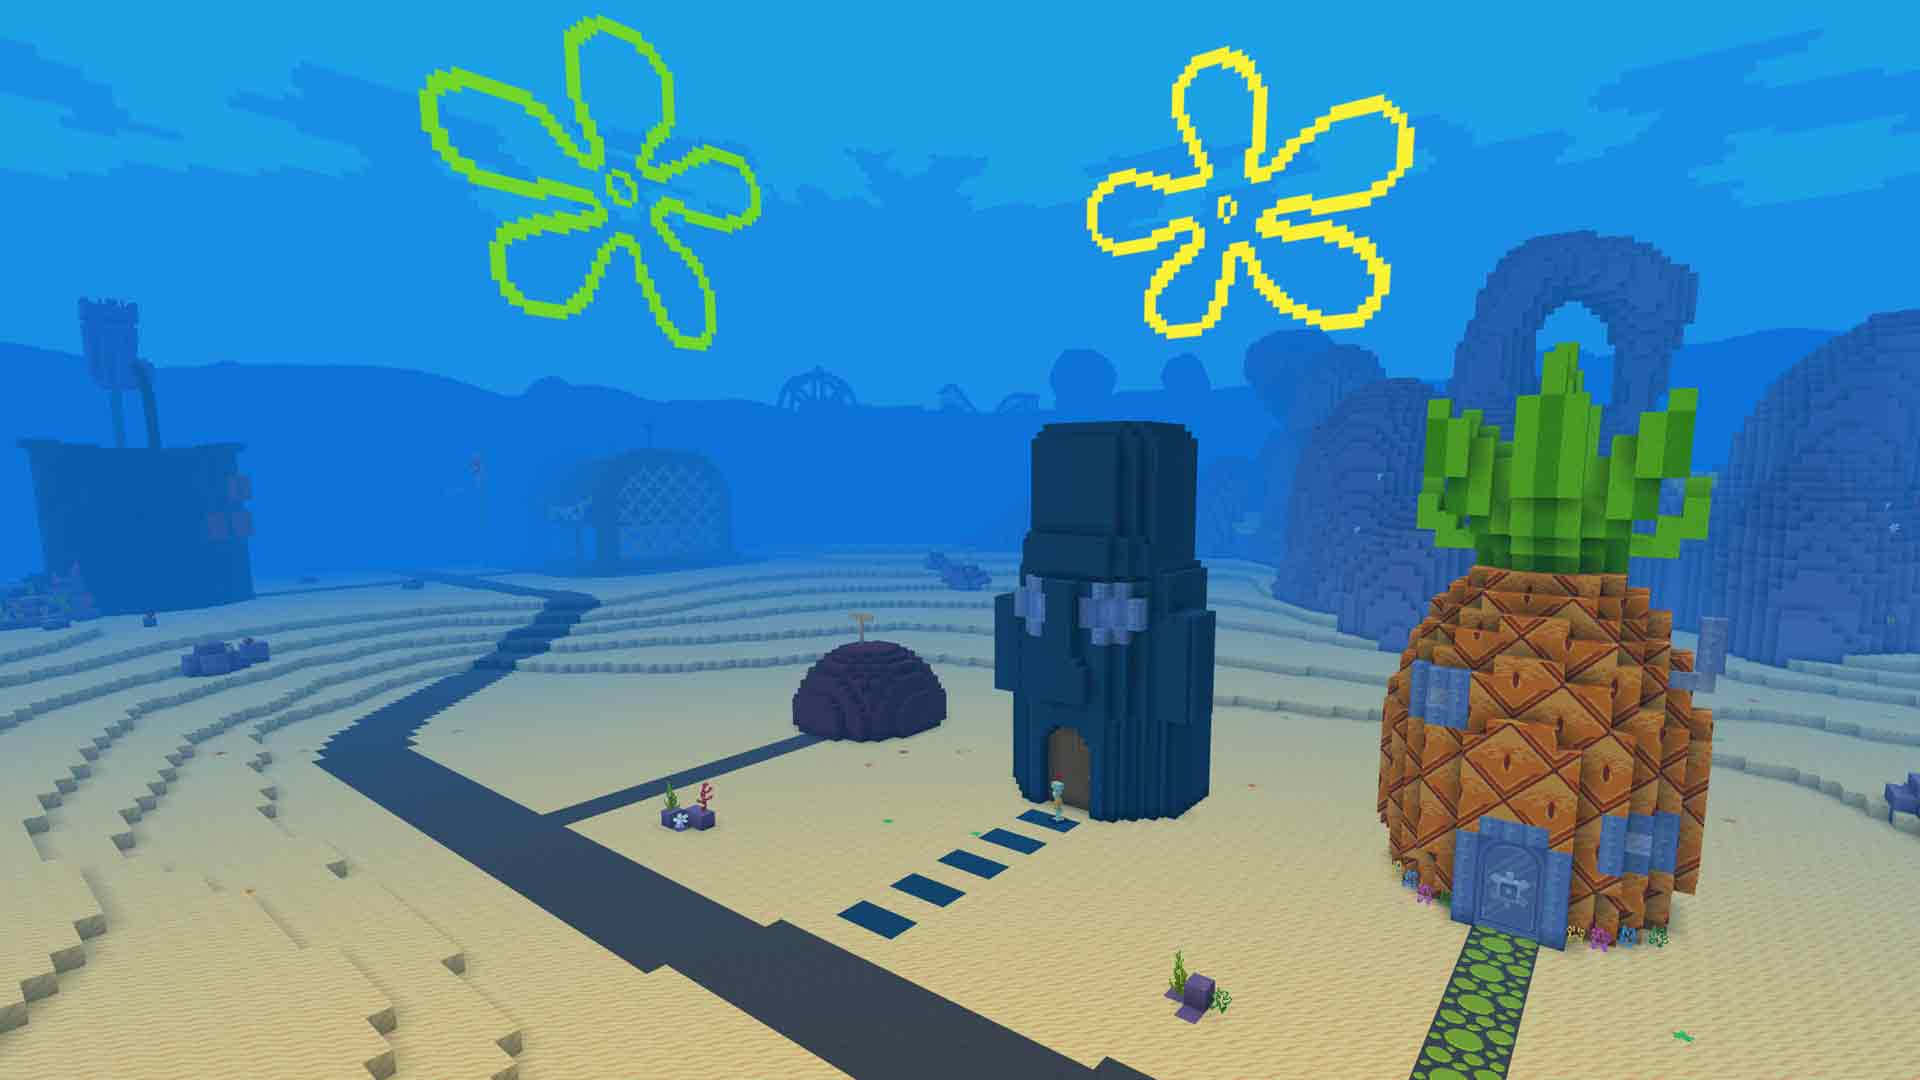 SpongeBob SquarePants Houses Picture